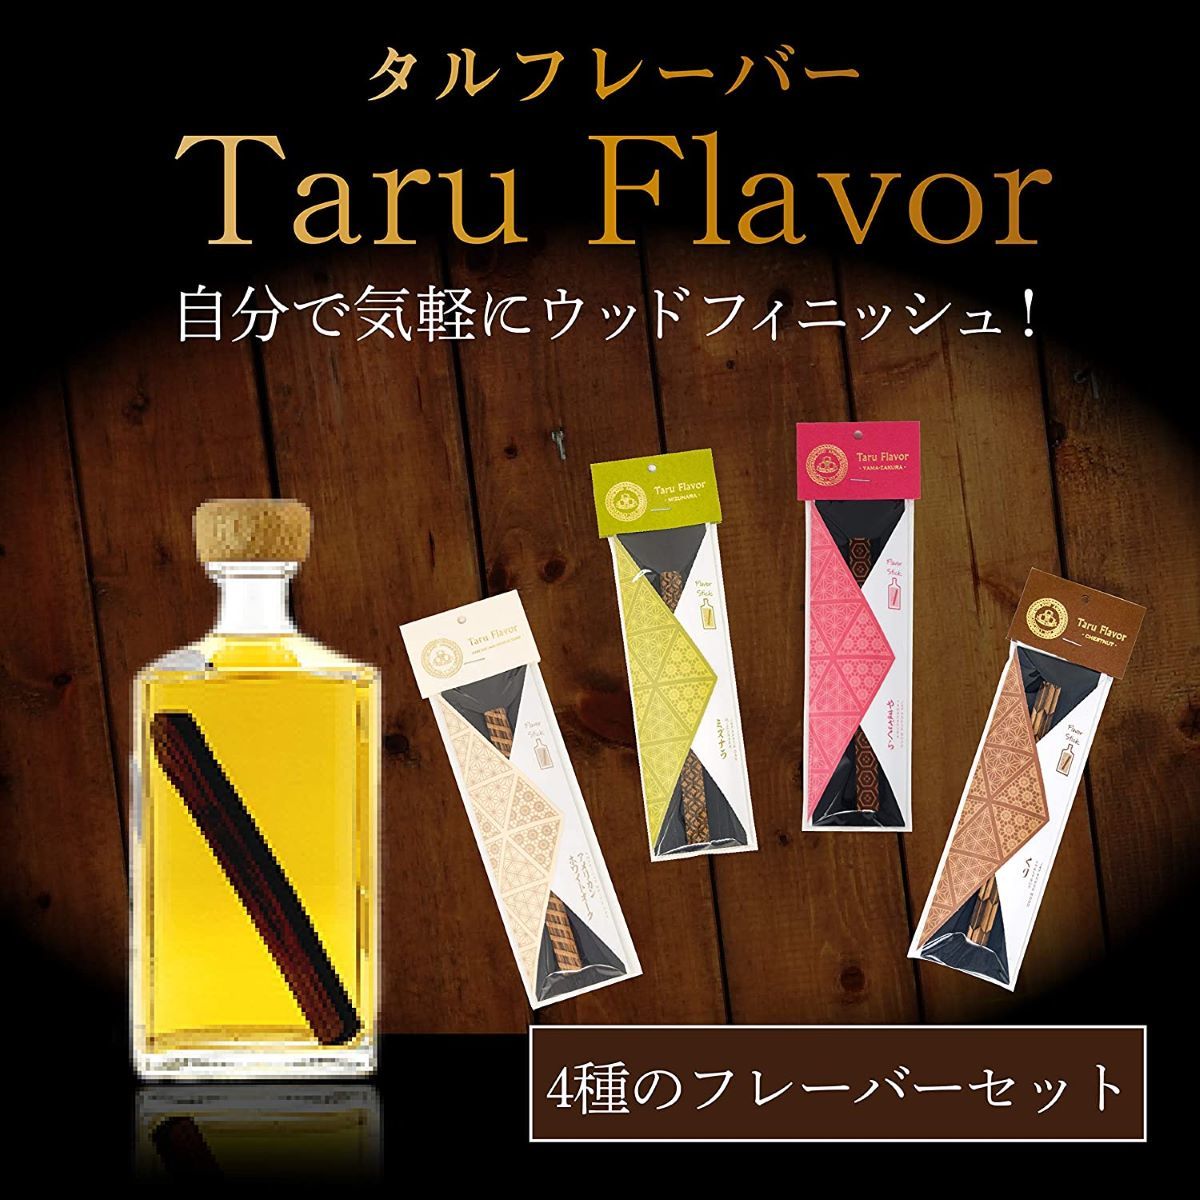 Taru Flavor 4種×各1本セット ホワイトオーク ヤマザクラ ミズナラ クリ 各1本 ワイン・バー・酒用品 